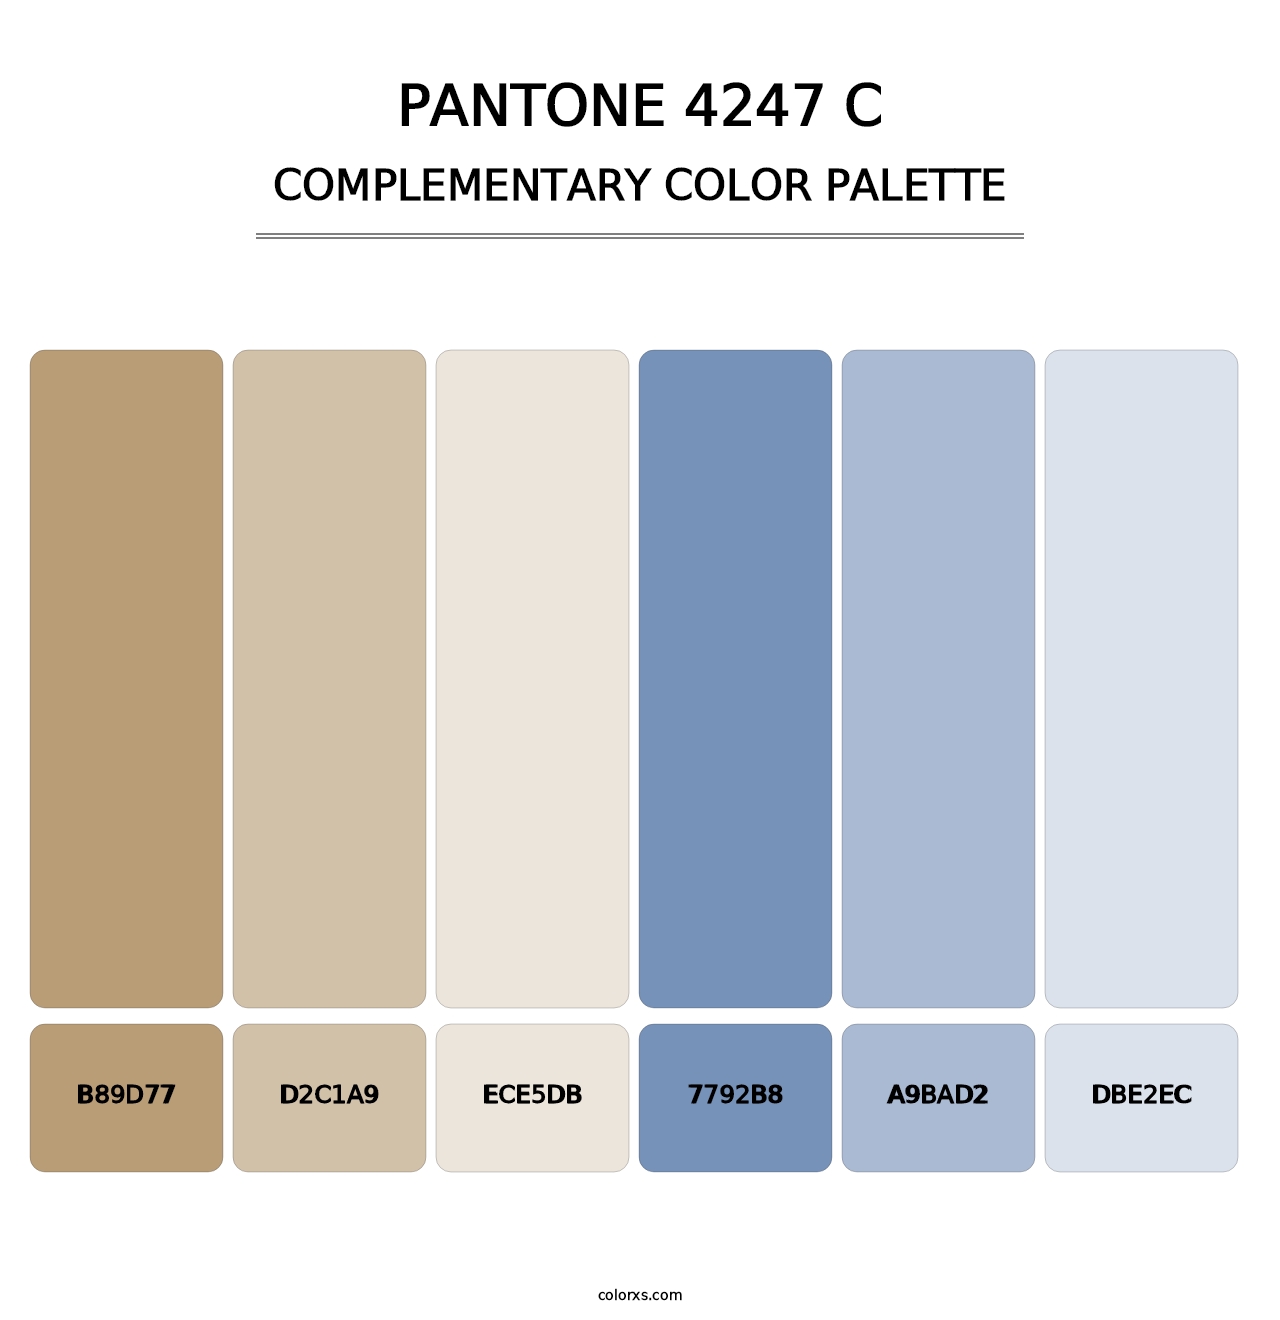 PANTONE 4247 C - Complementary Color Palette